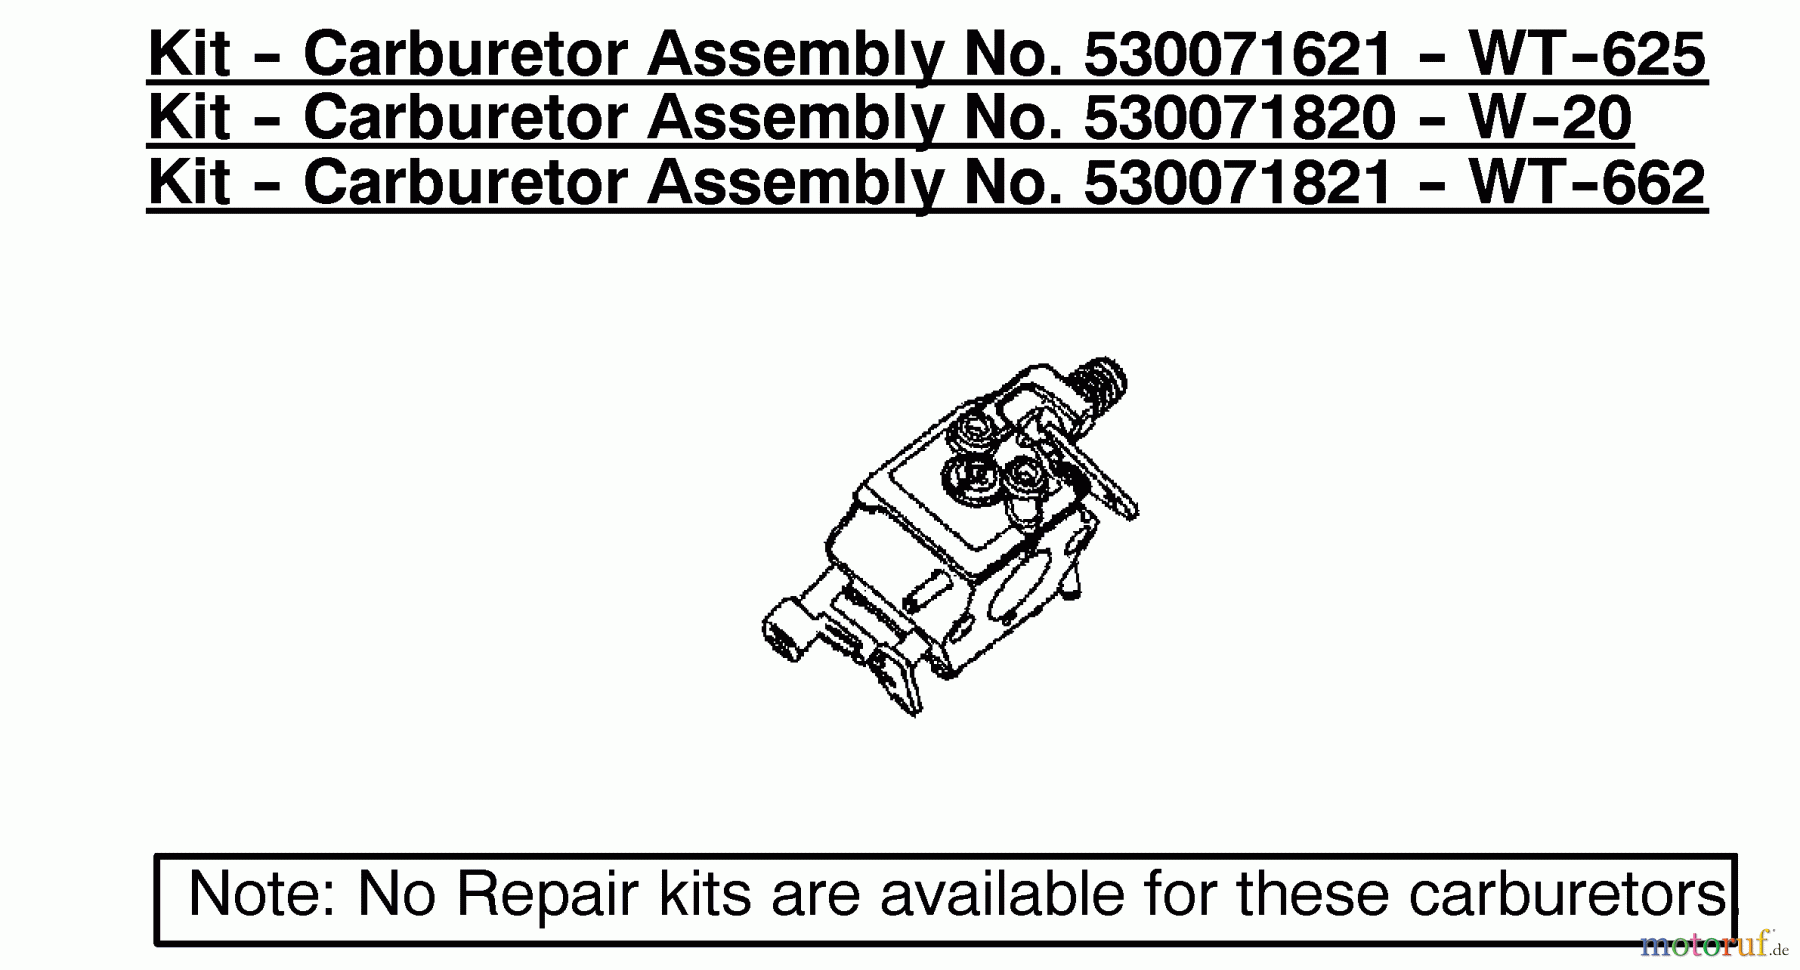  Poulan / Weed Eater Motorsägen 2550 (Type 7) - Poulan Woodmaster Chainsaw Kit - Carburetor Assembly 530071621/530071820/530071821